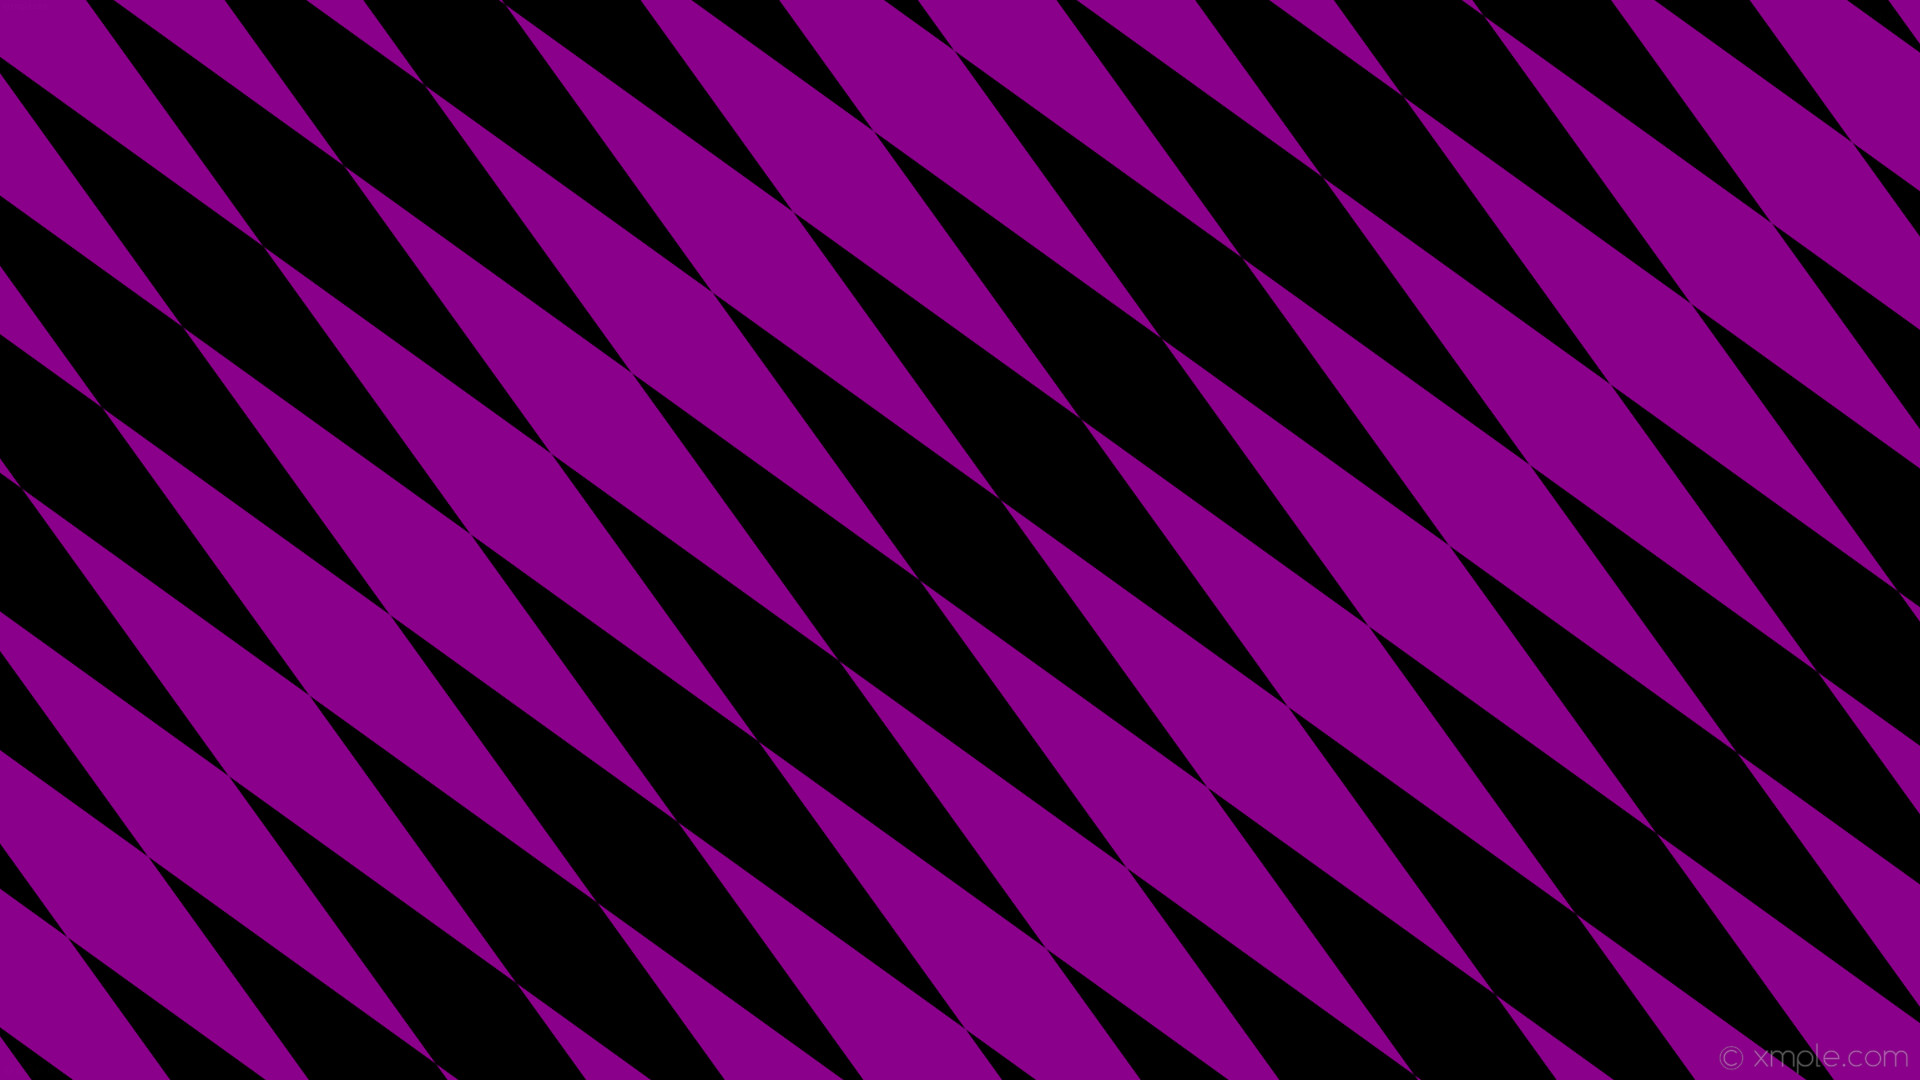 1920x1080 wallpaper lozenge black purple diamond rhombus dark magenta #000000 #8b008b  135Â° 700px 114px